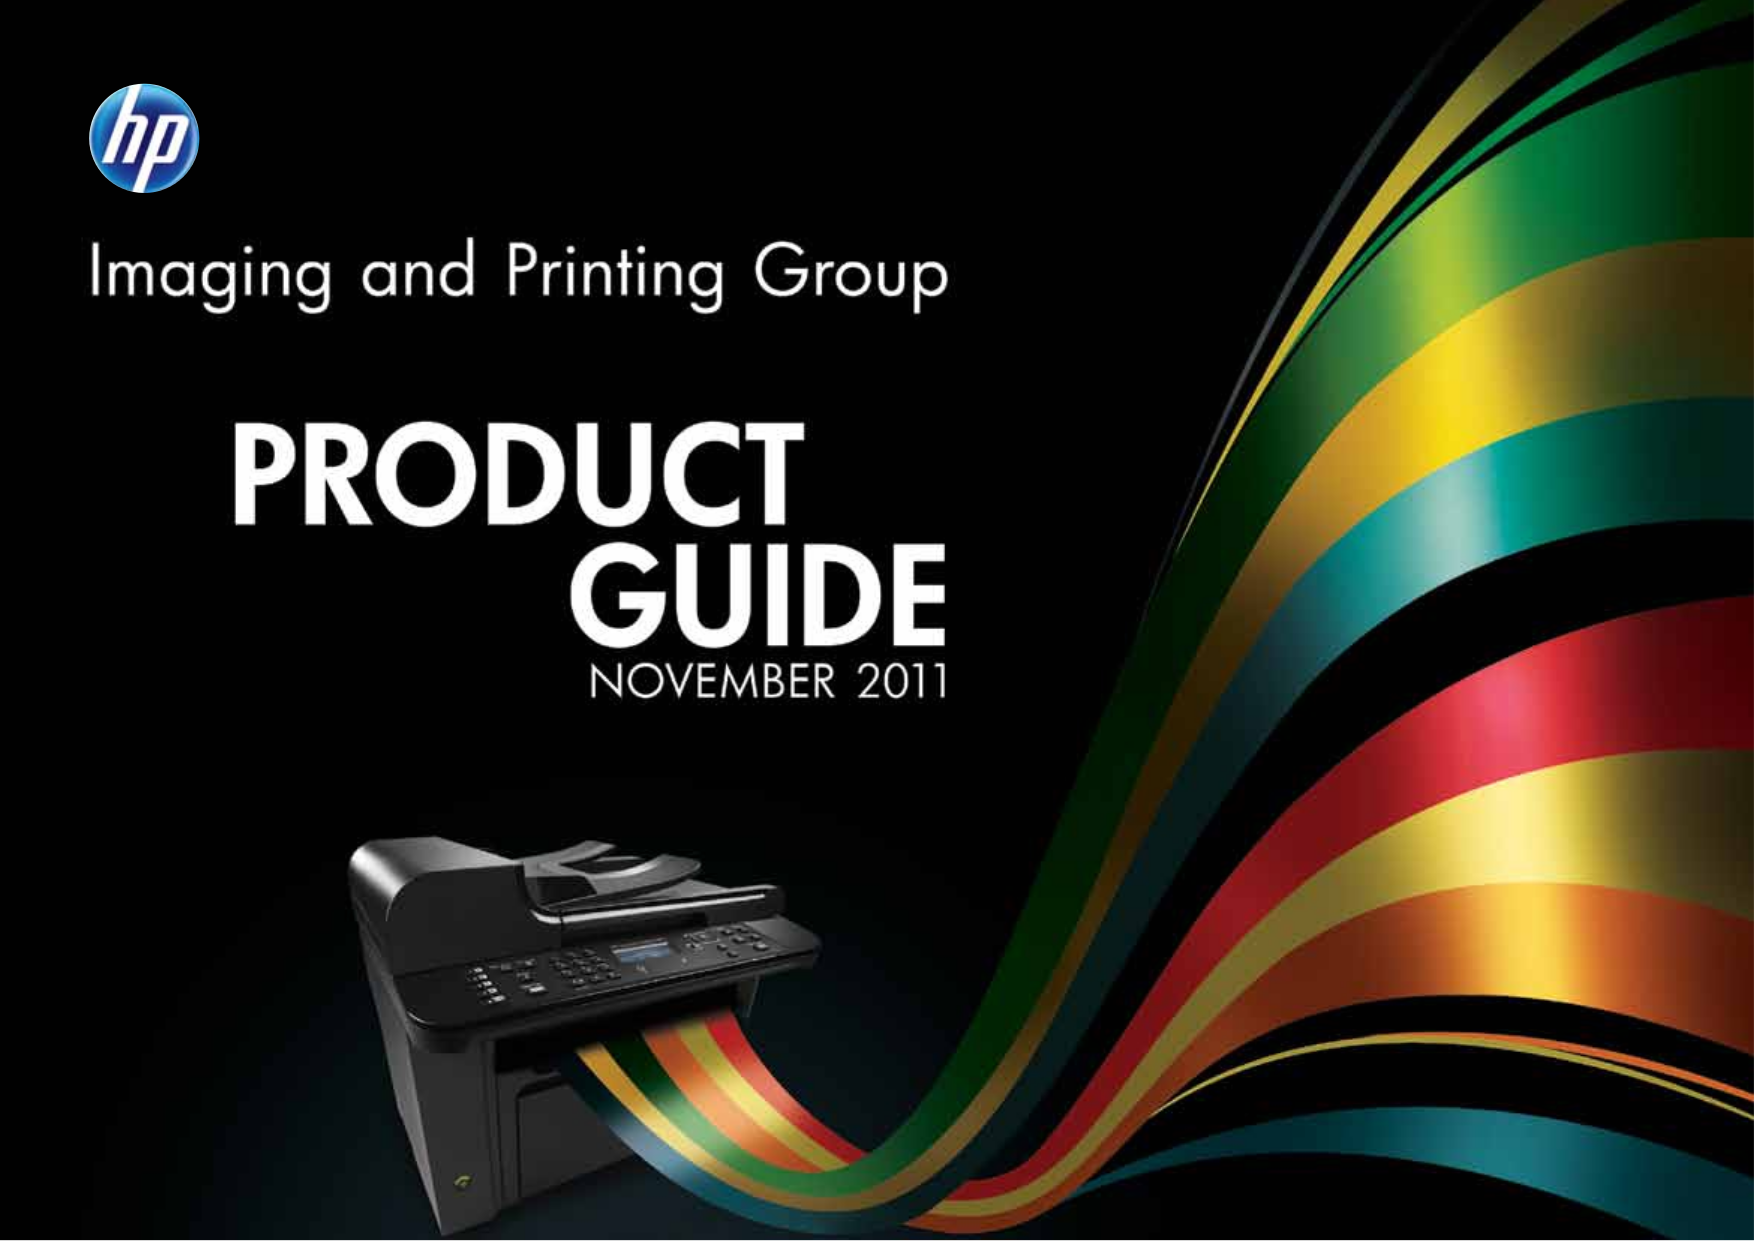 Download free pdf for HP Envy 110 Multifunction Printer manual